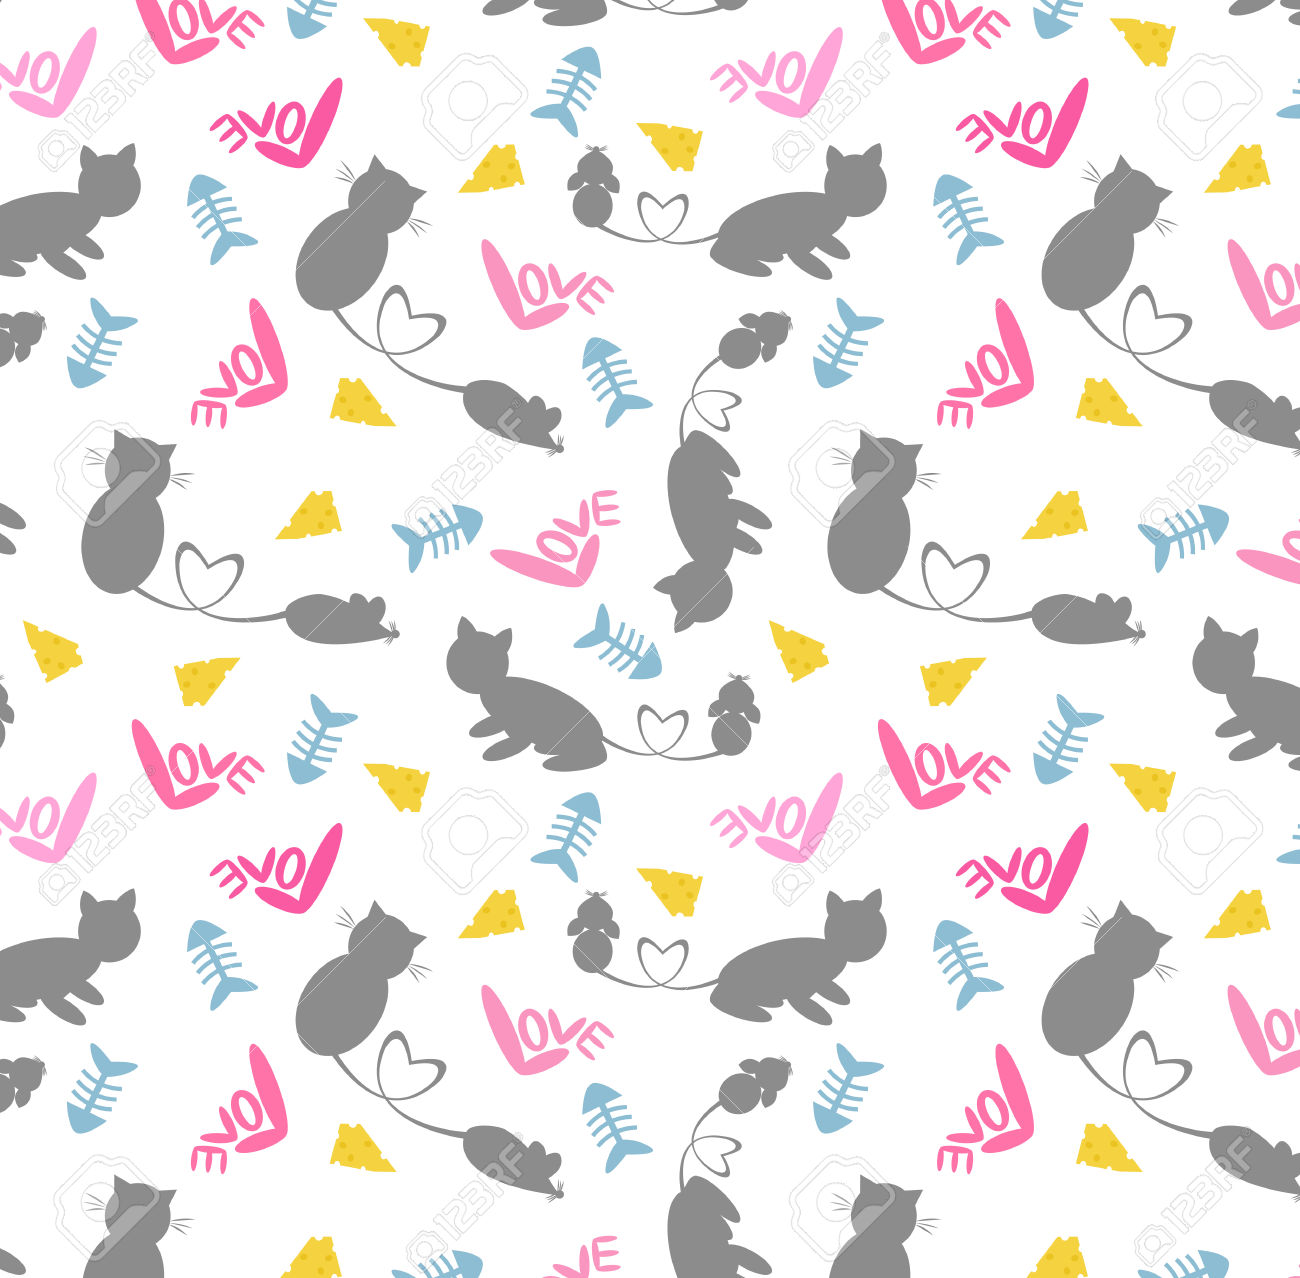 Cat Cartoon Wallpapers